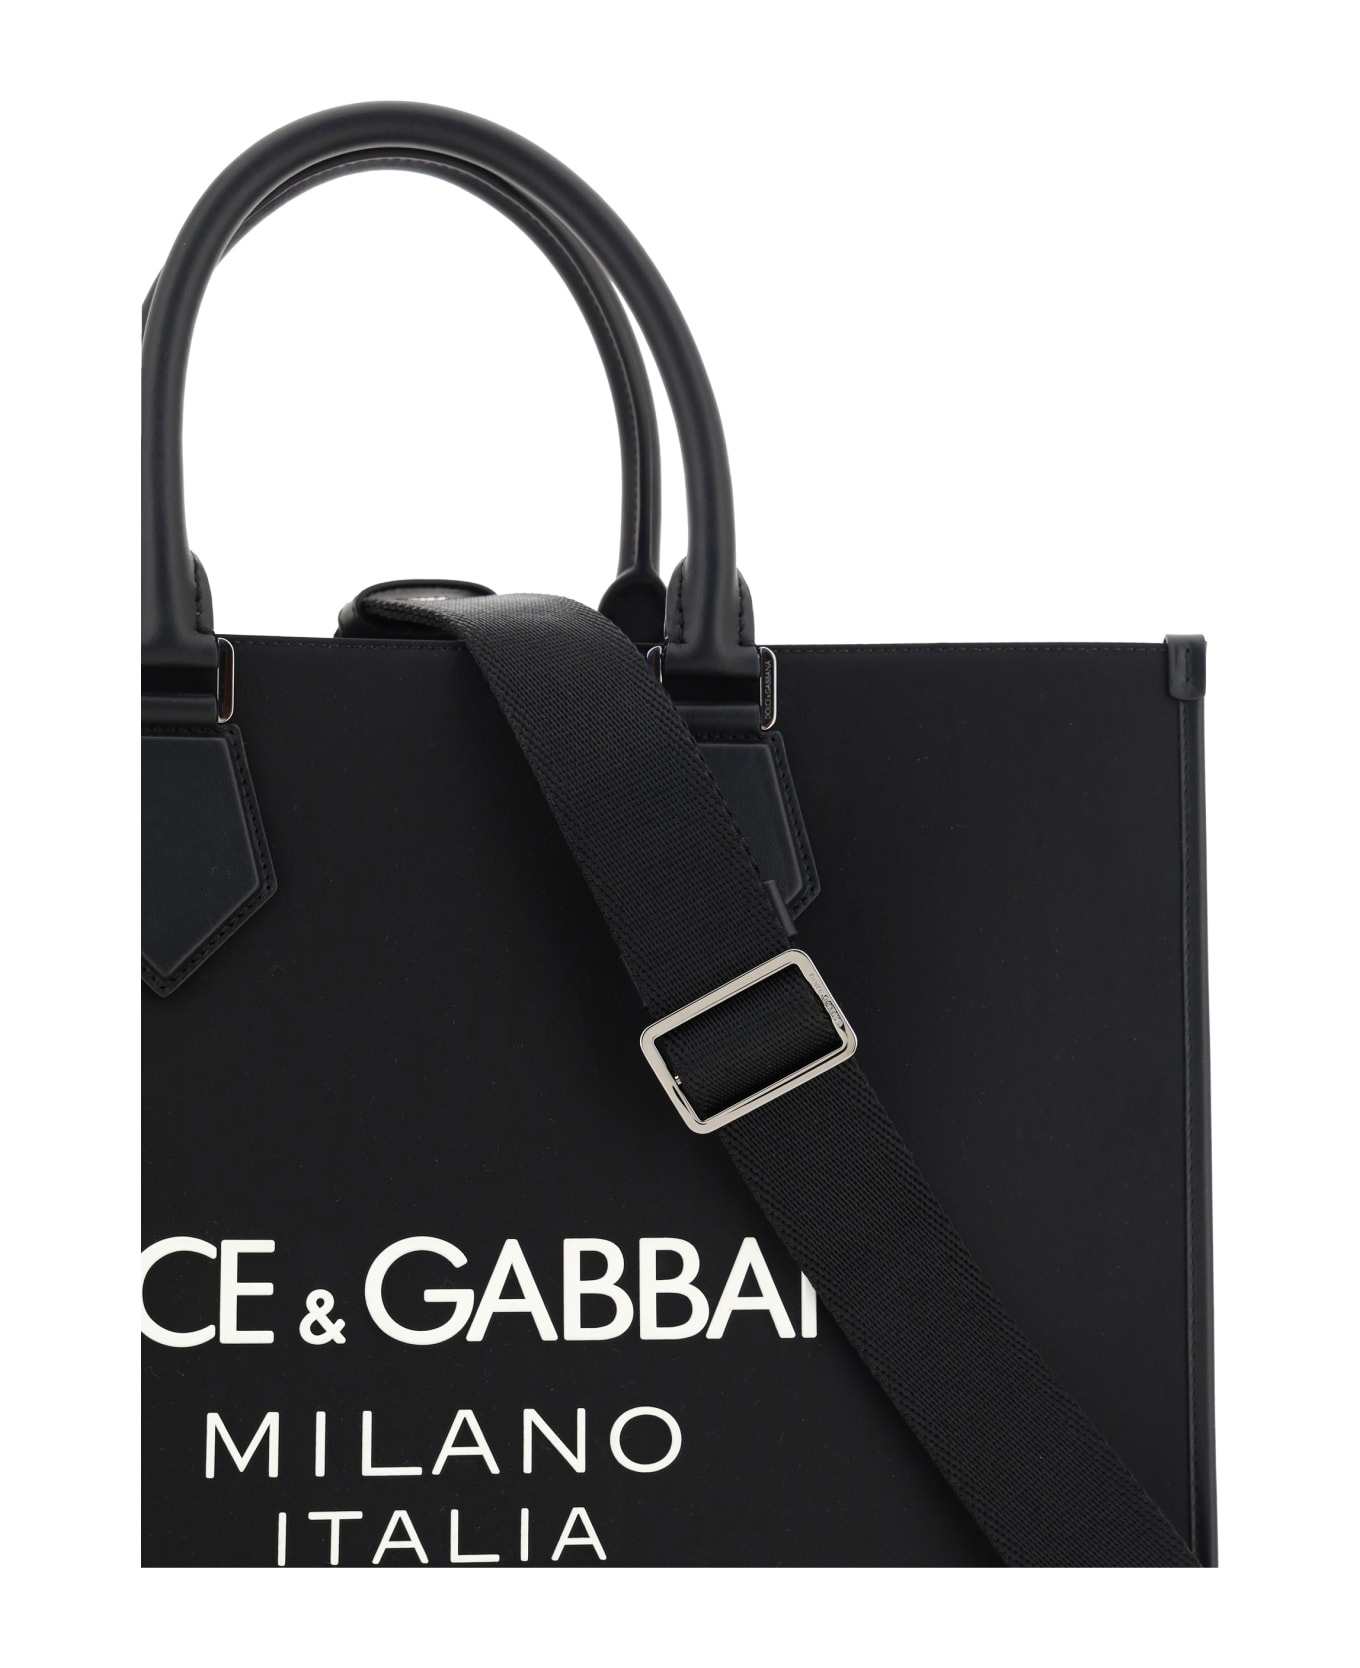 Dolce & Gabbana Tote Bag - Nero/nero トートバッグ